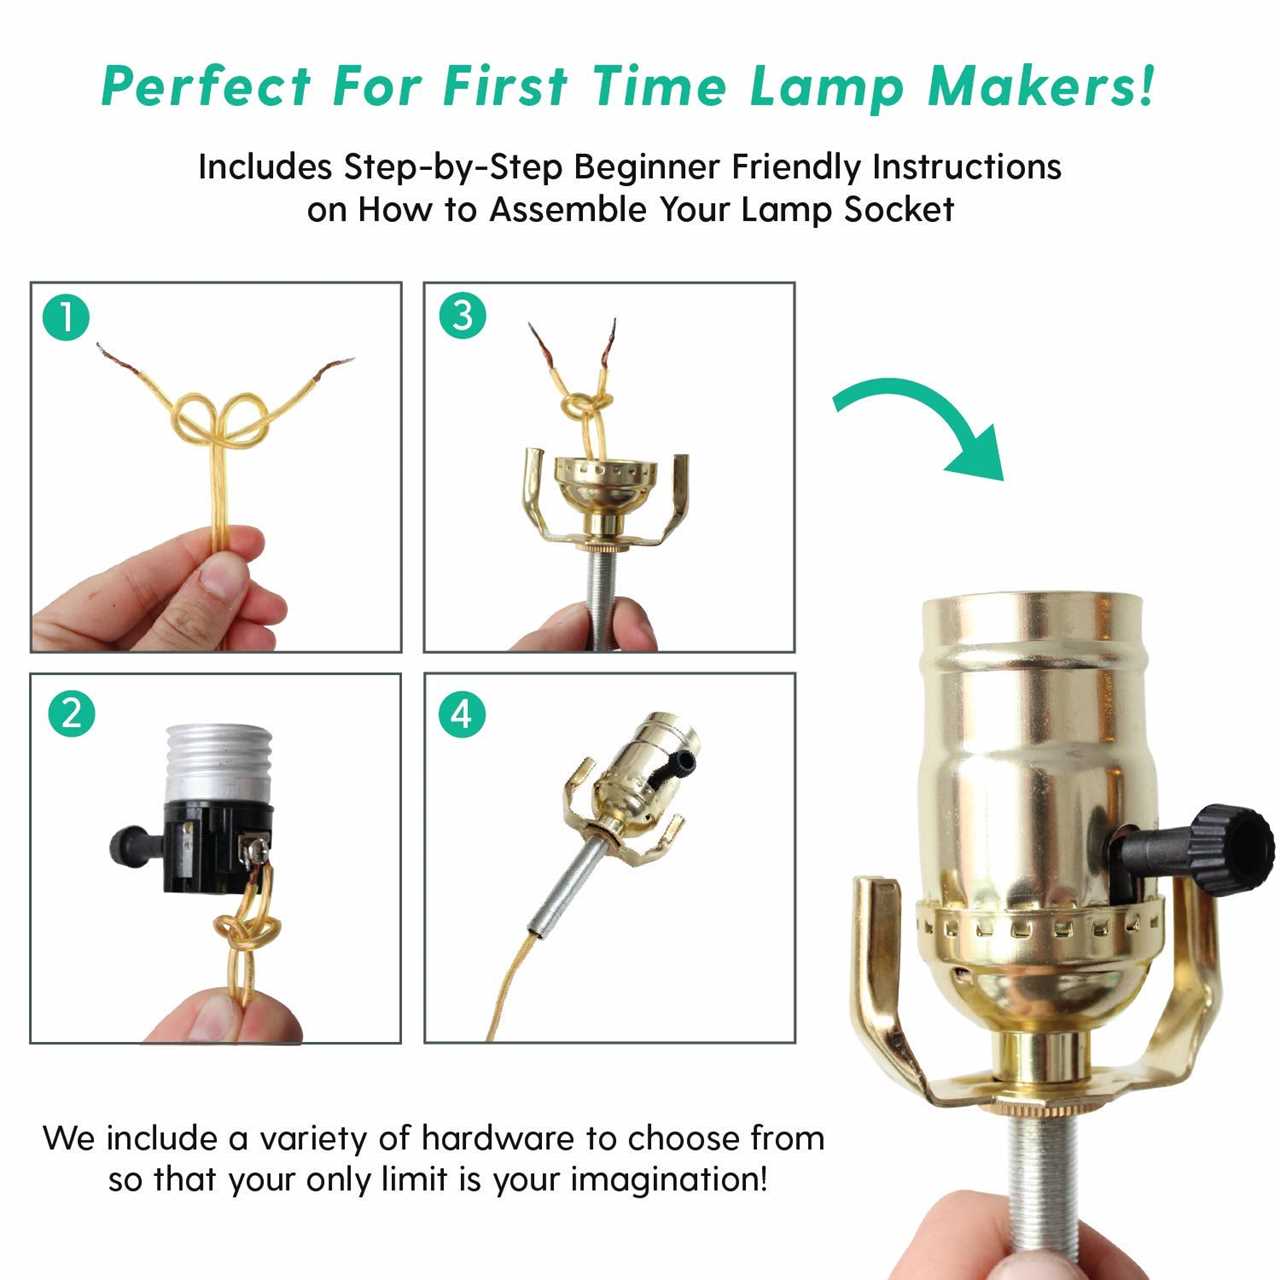 Step 2: Remove Old Lamp Socket